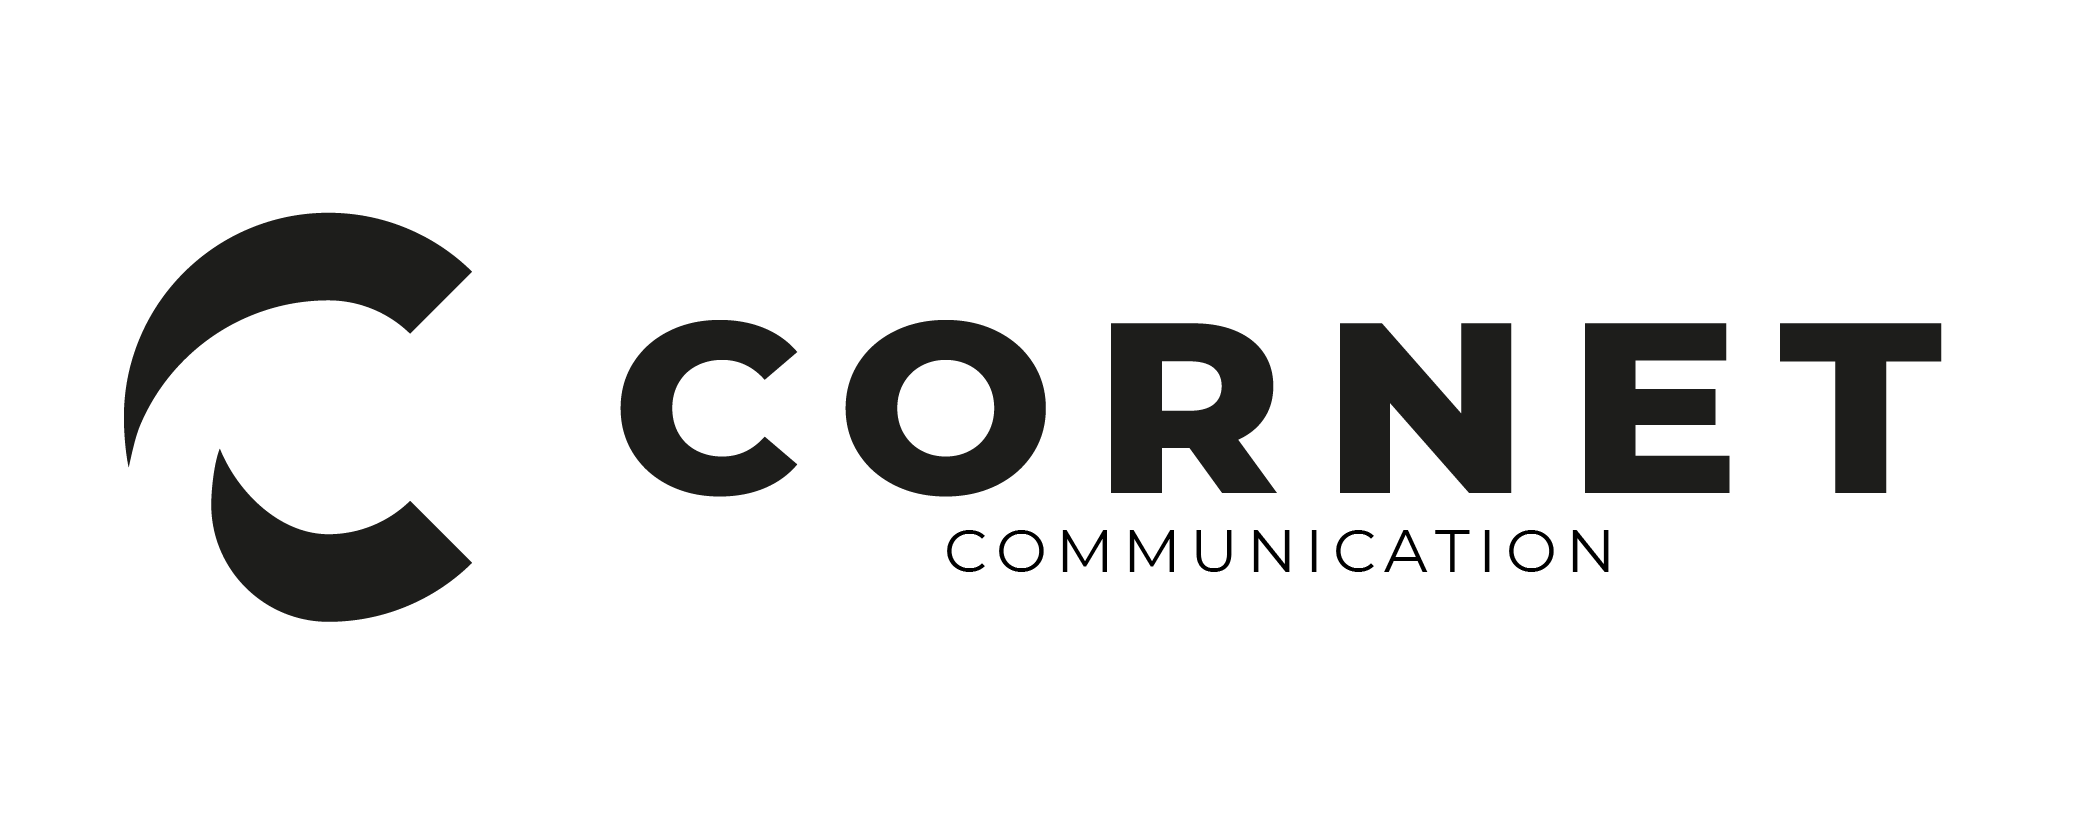 Logotype de Cornet Communication